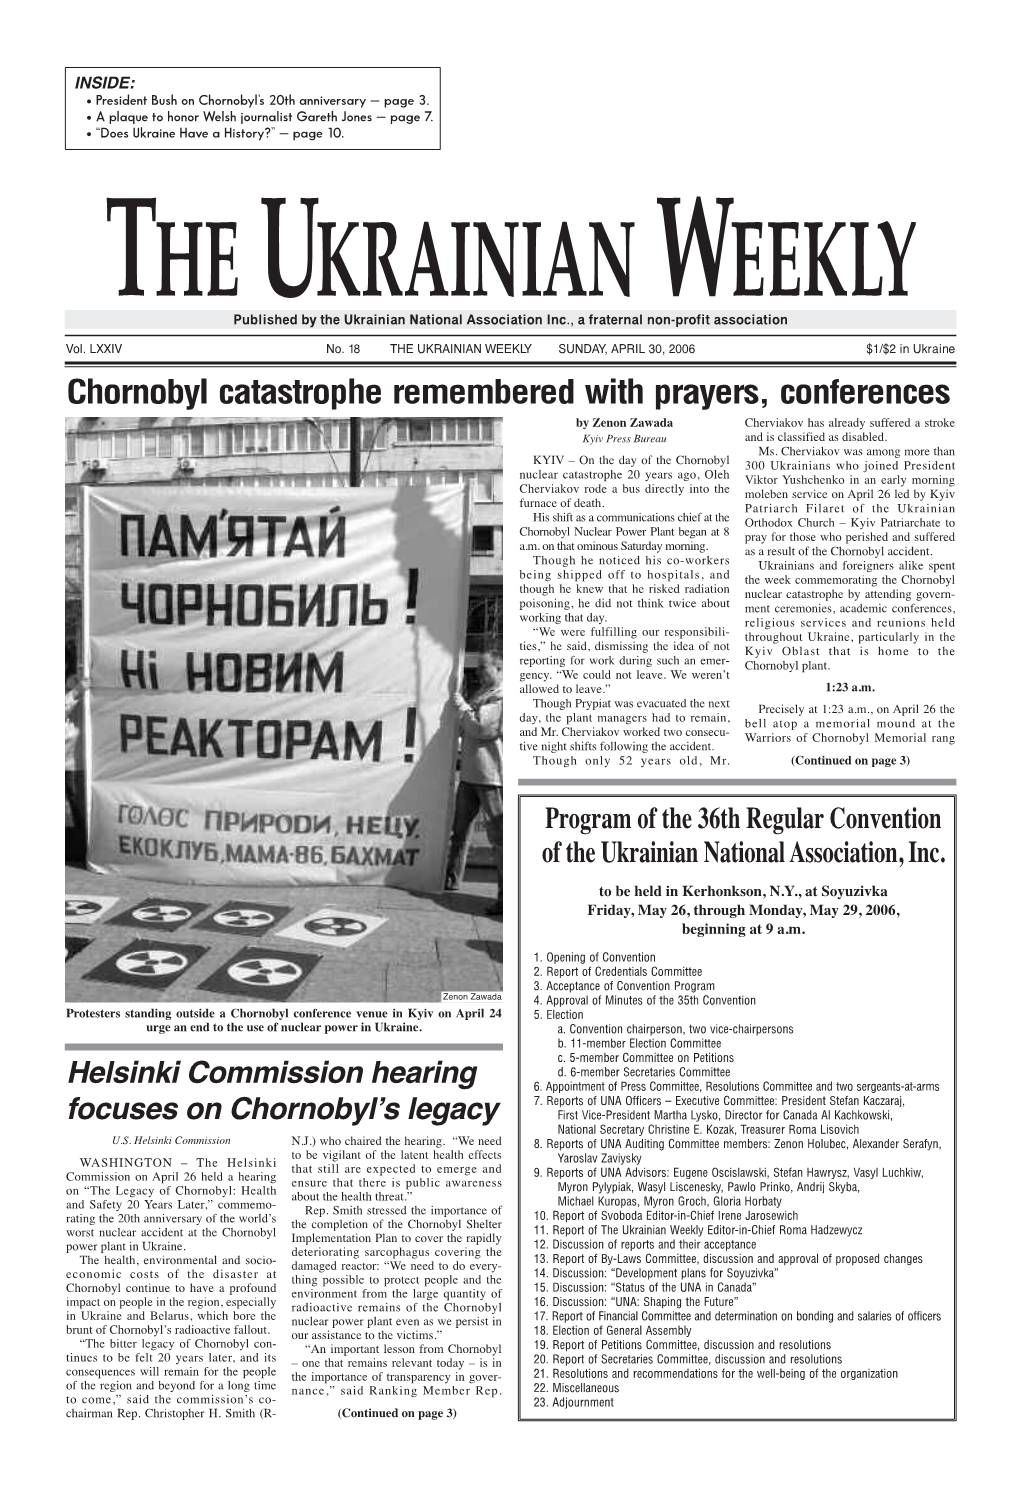 The Ukrainian Weekly 2006, No.18